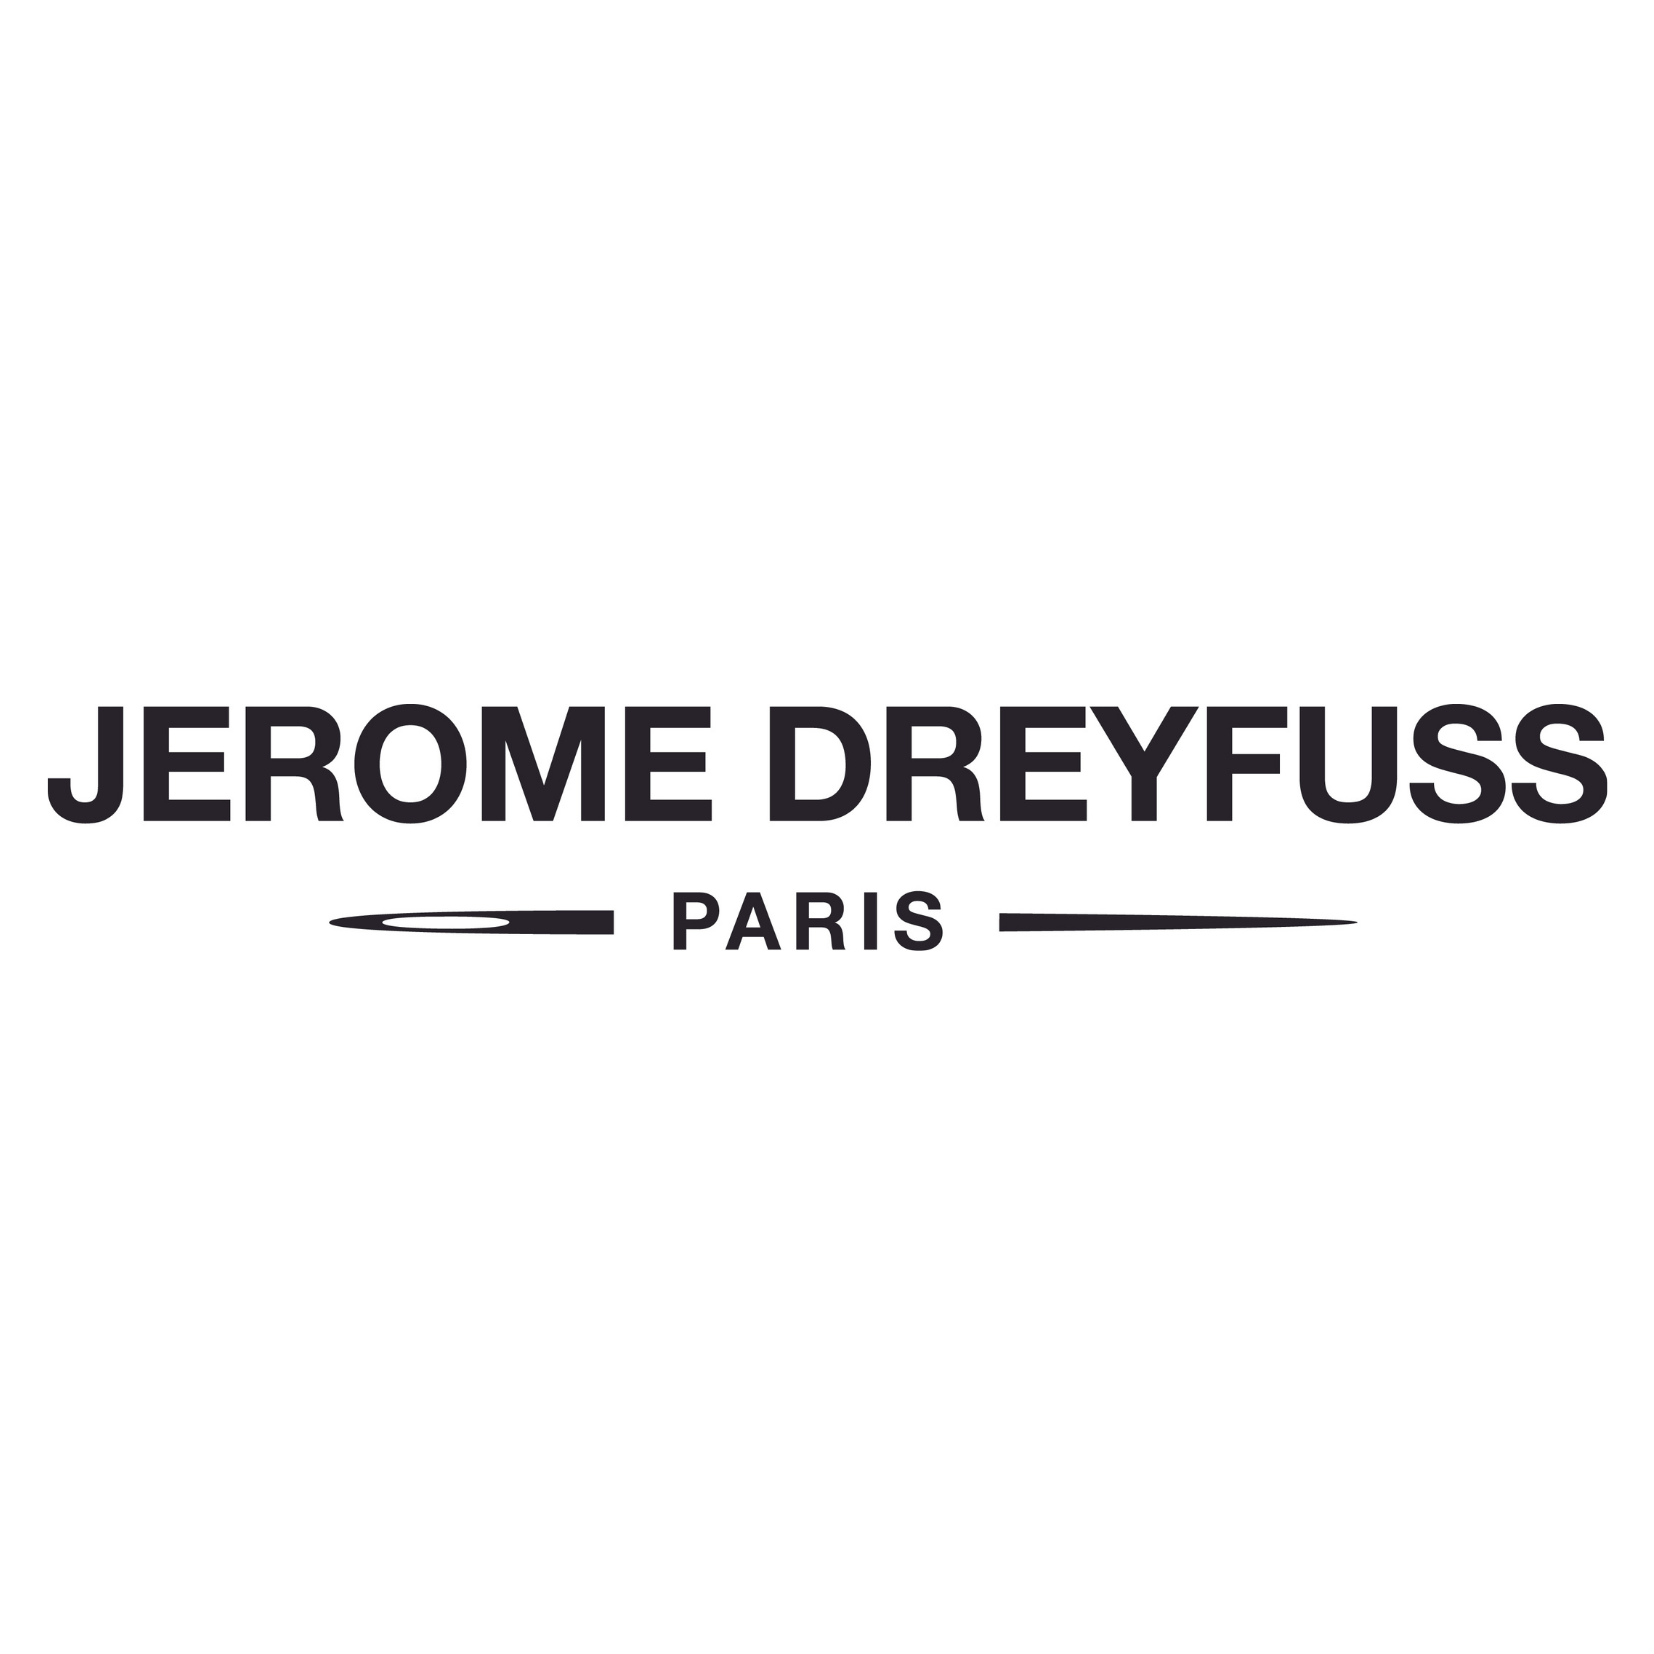 Jerome Dreyfuss